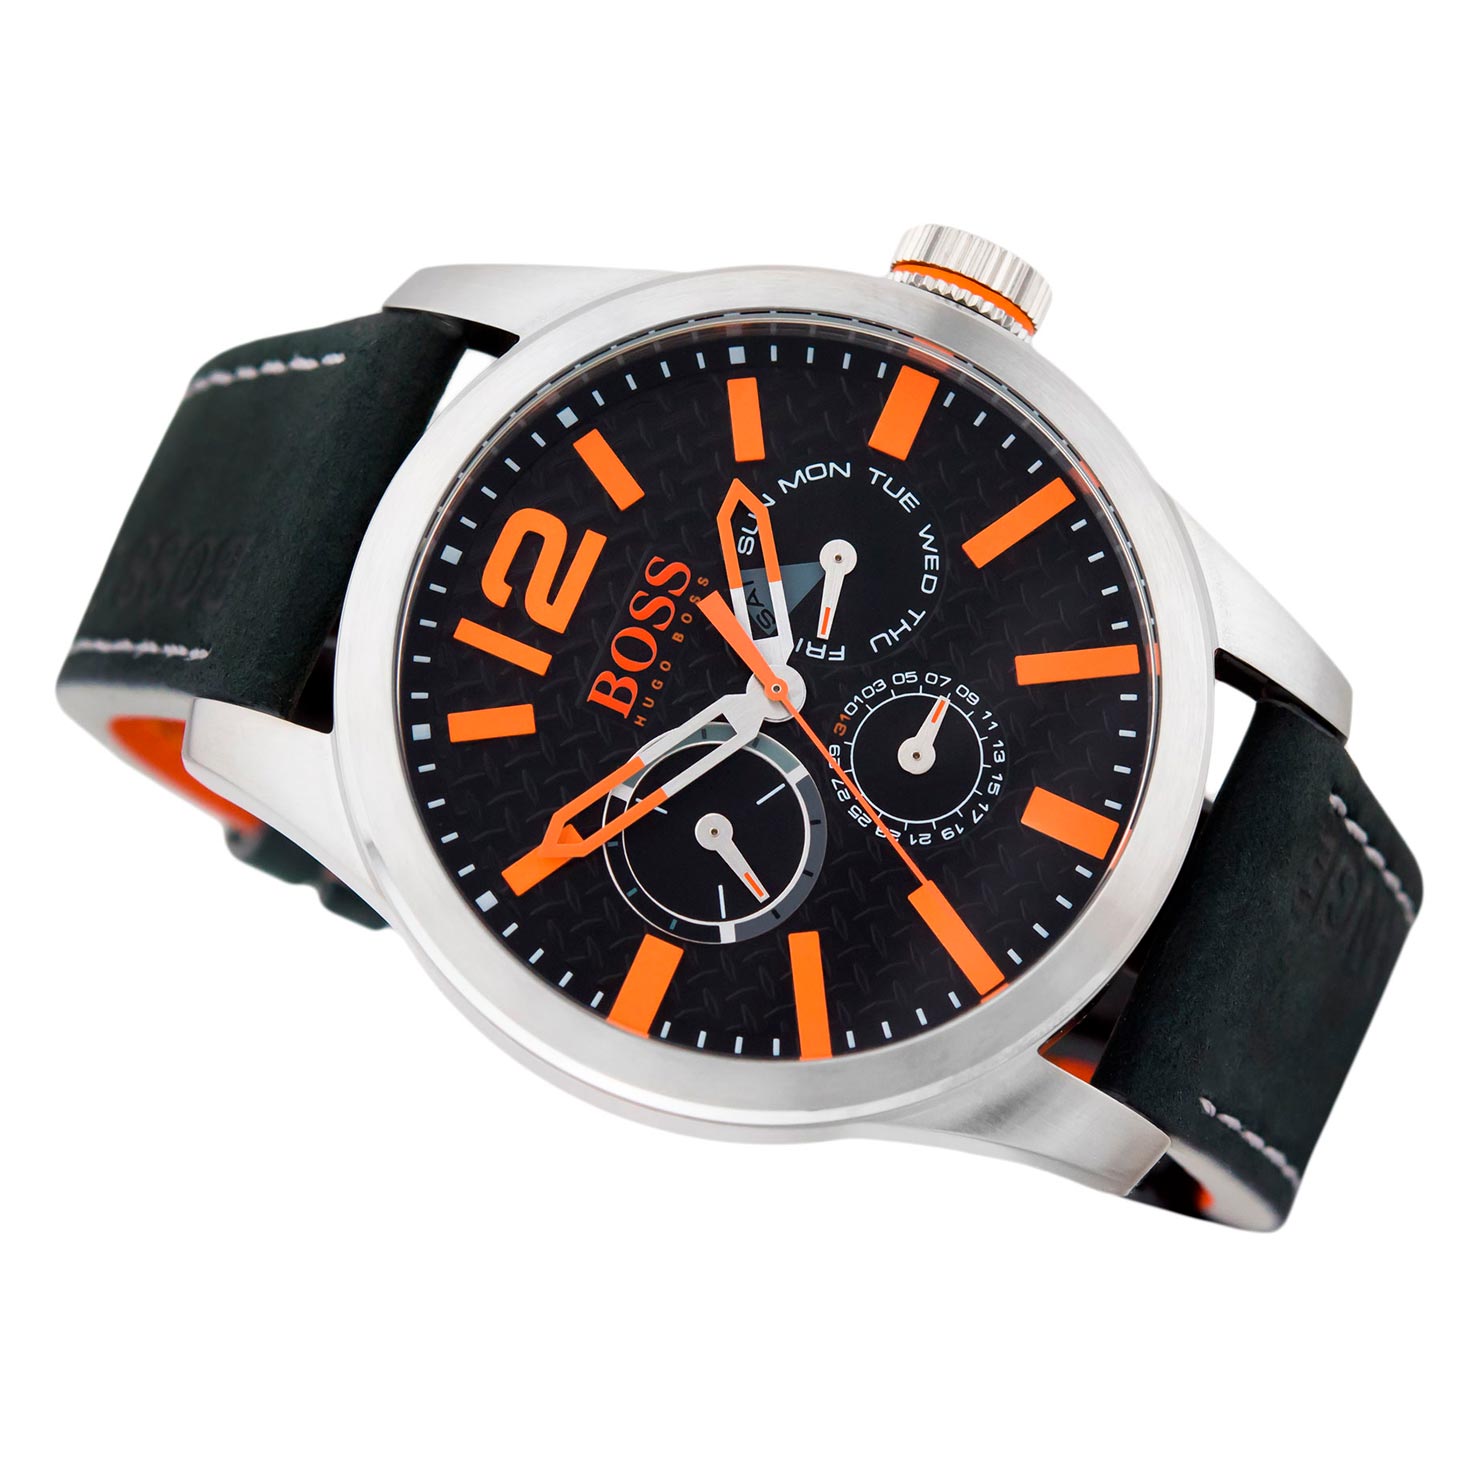 Reloj Hugo Boss Paris 1513228 Para Hombre Multifuncional Correa de Cuero Negro Naranja